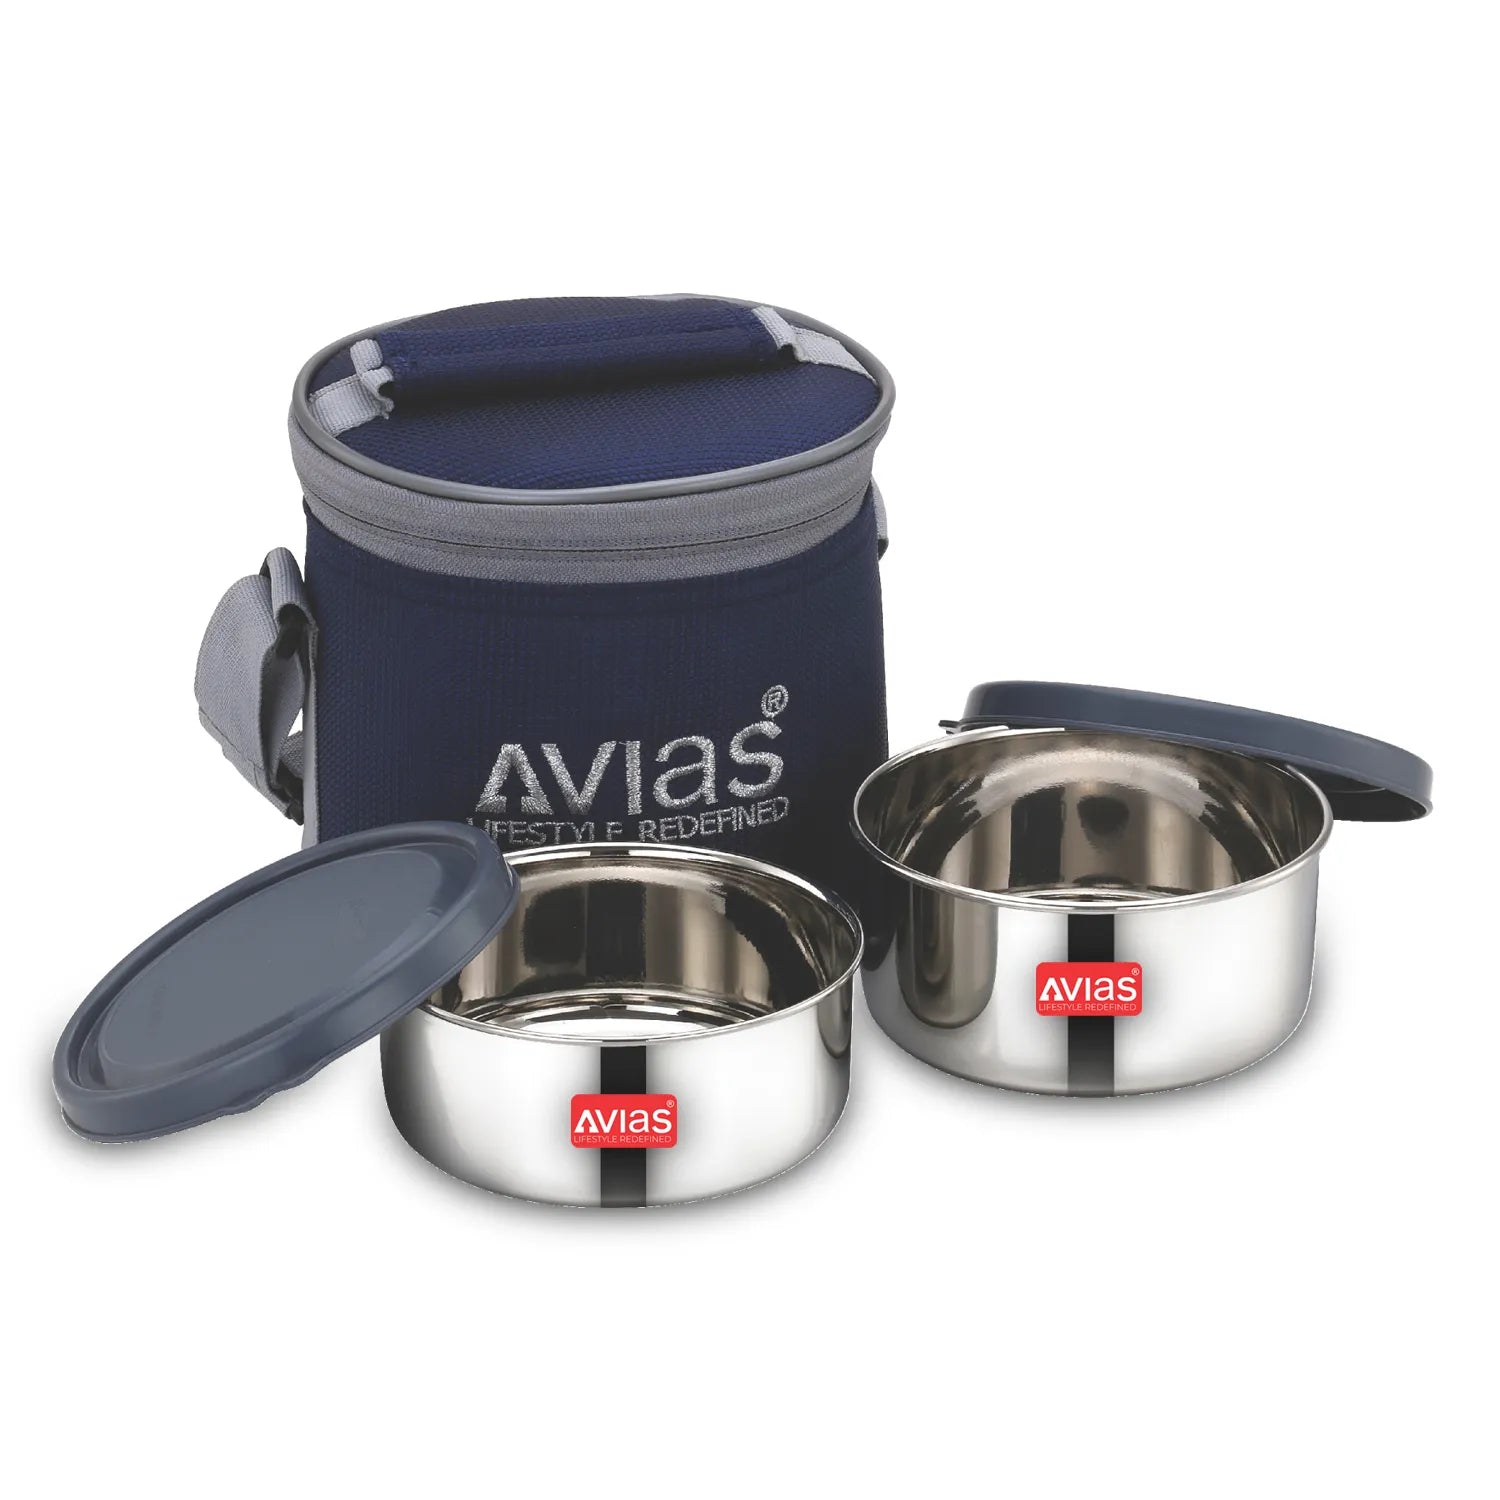 AVIAS Freshia stainless steel lunch/ tiffin box